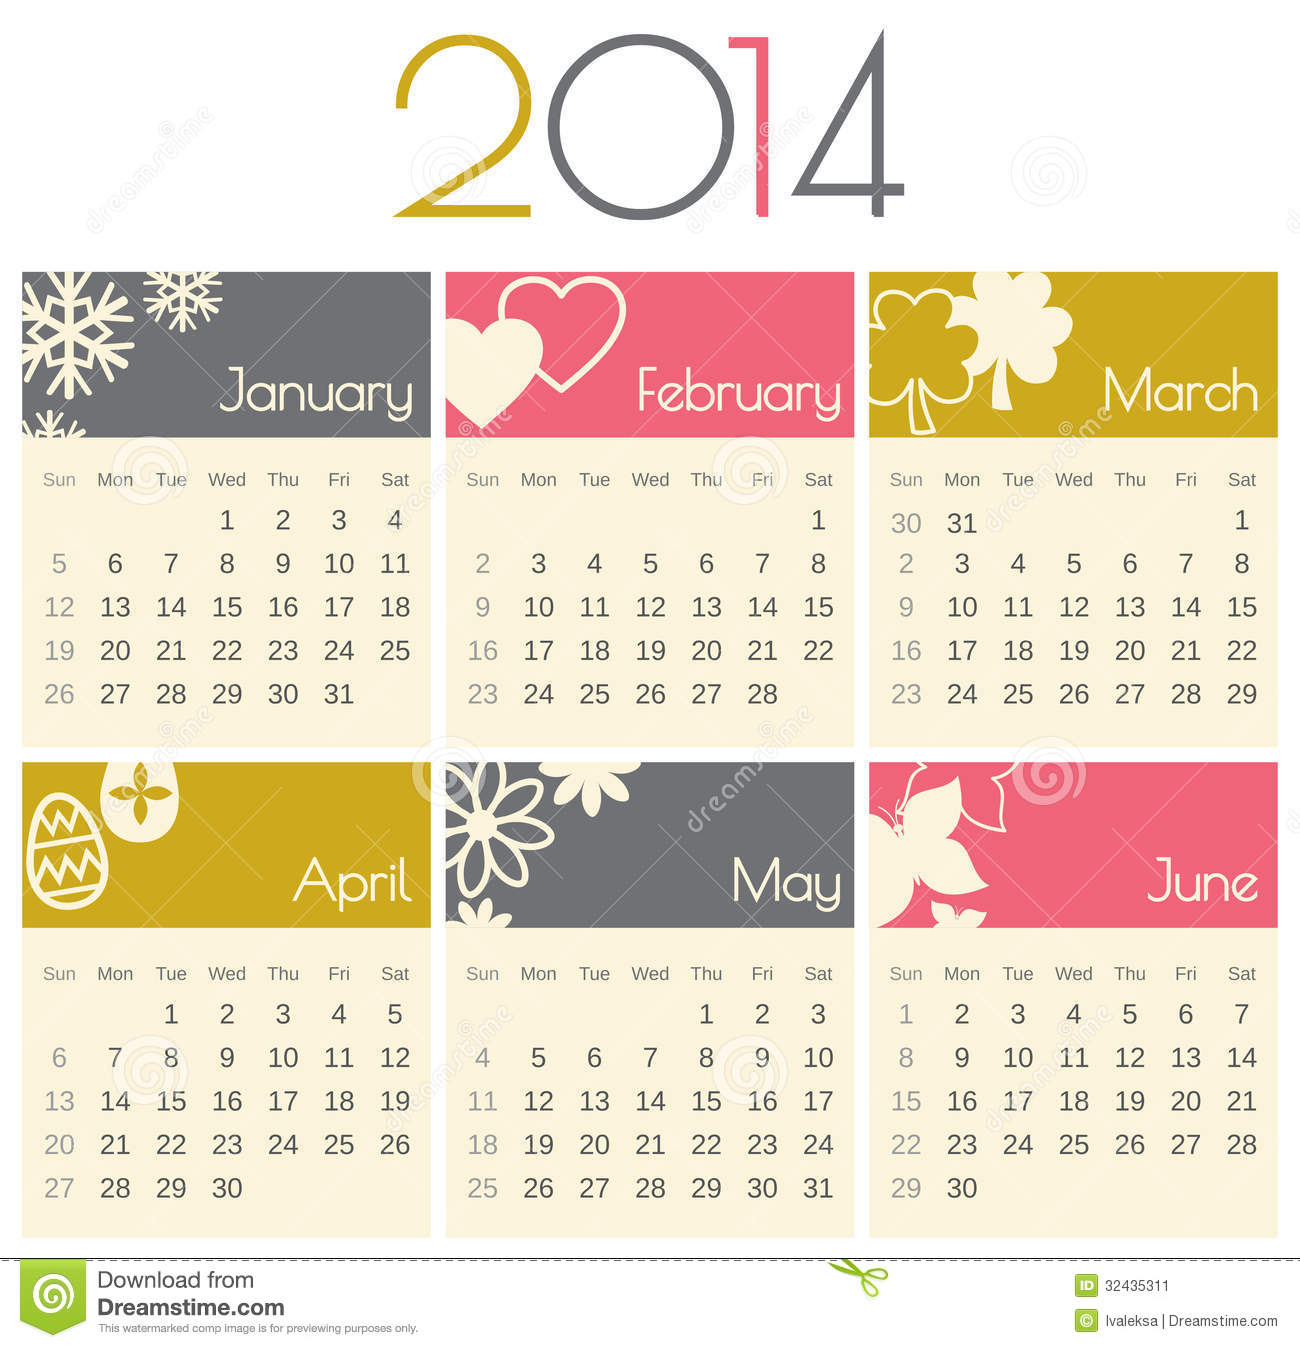 2014 Calendar Stock Image   Image  32435311